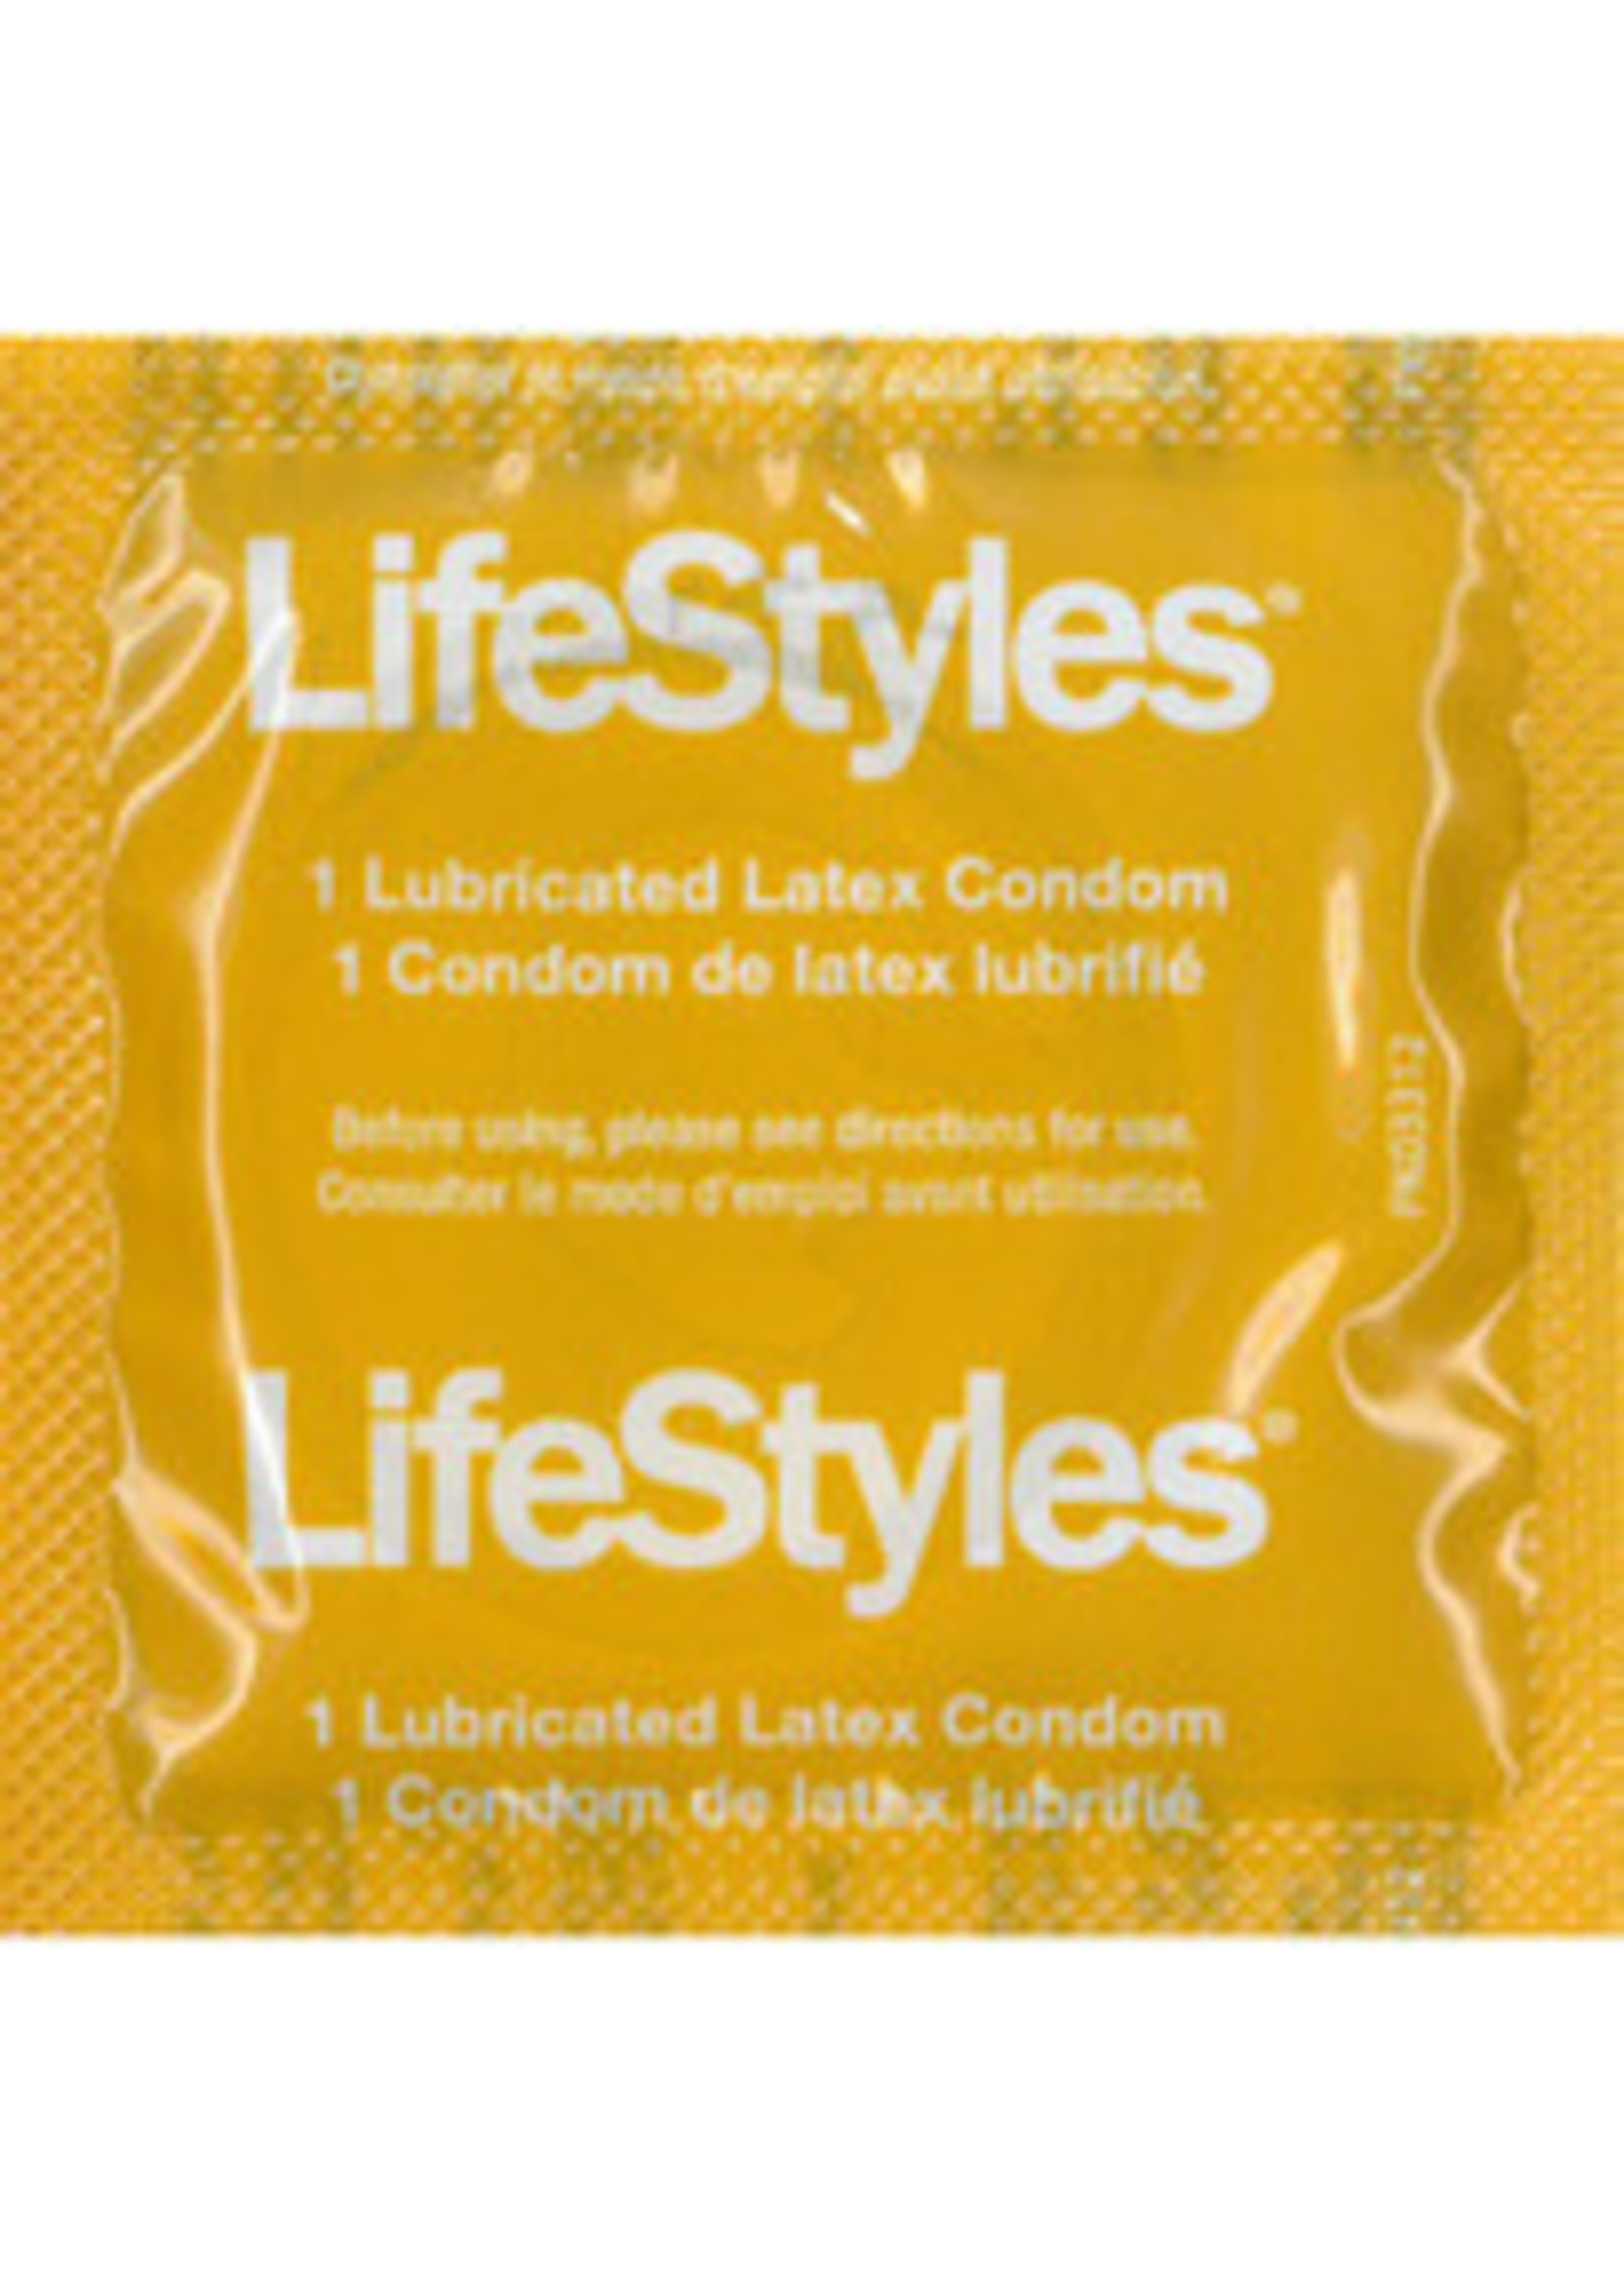 Lifestyles LIFESTYLES ASSORTED FLAVORS Condom single